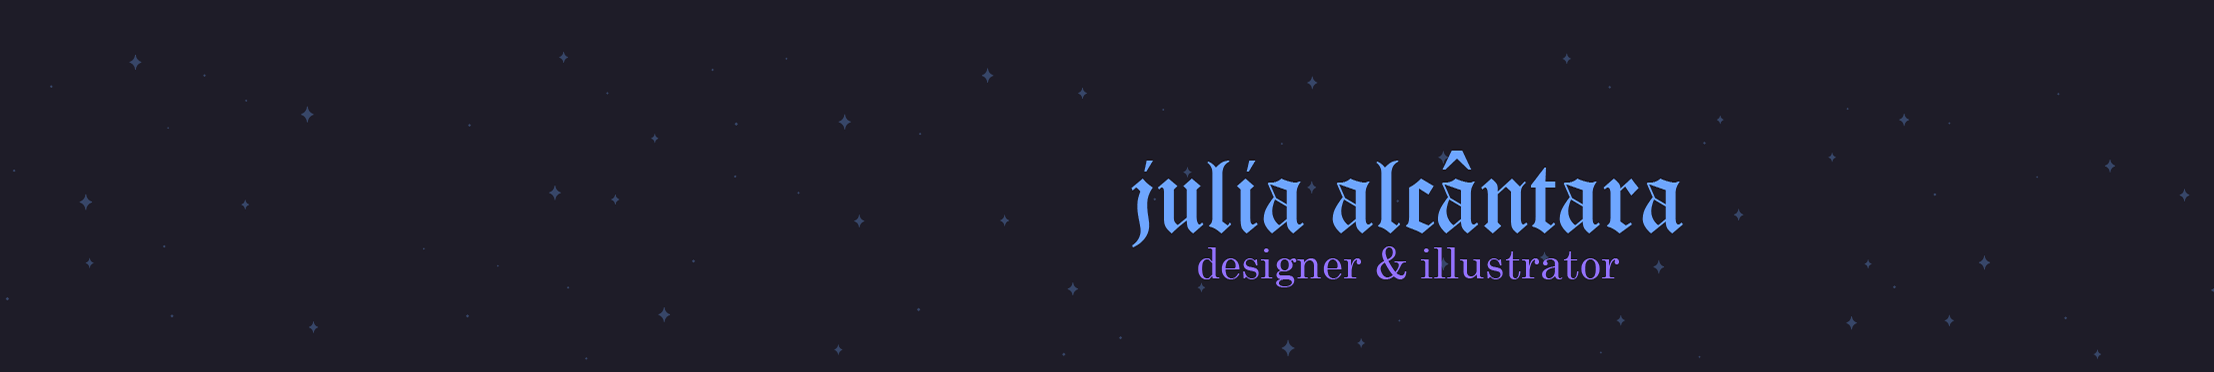 Banner de perfil de Julia Alcântara